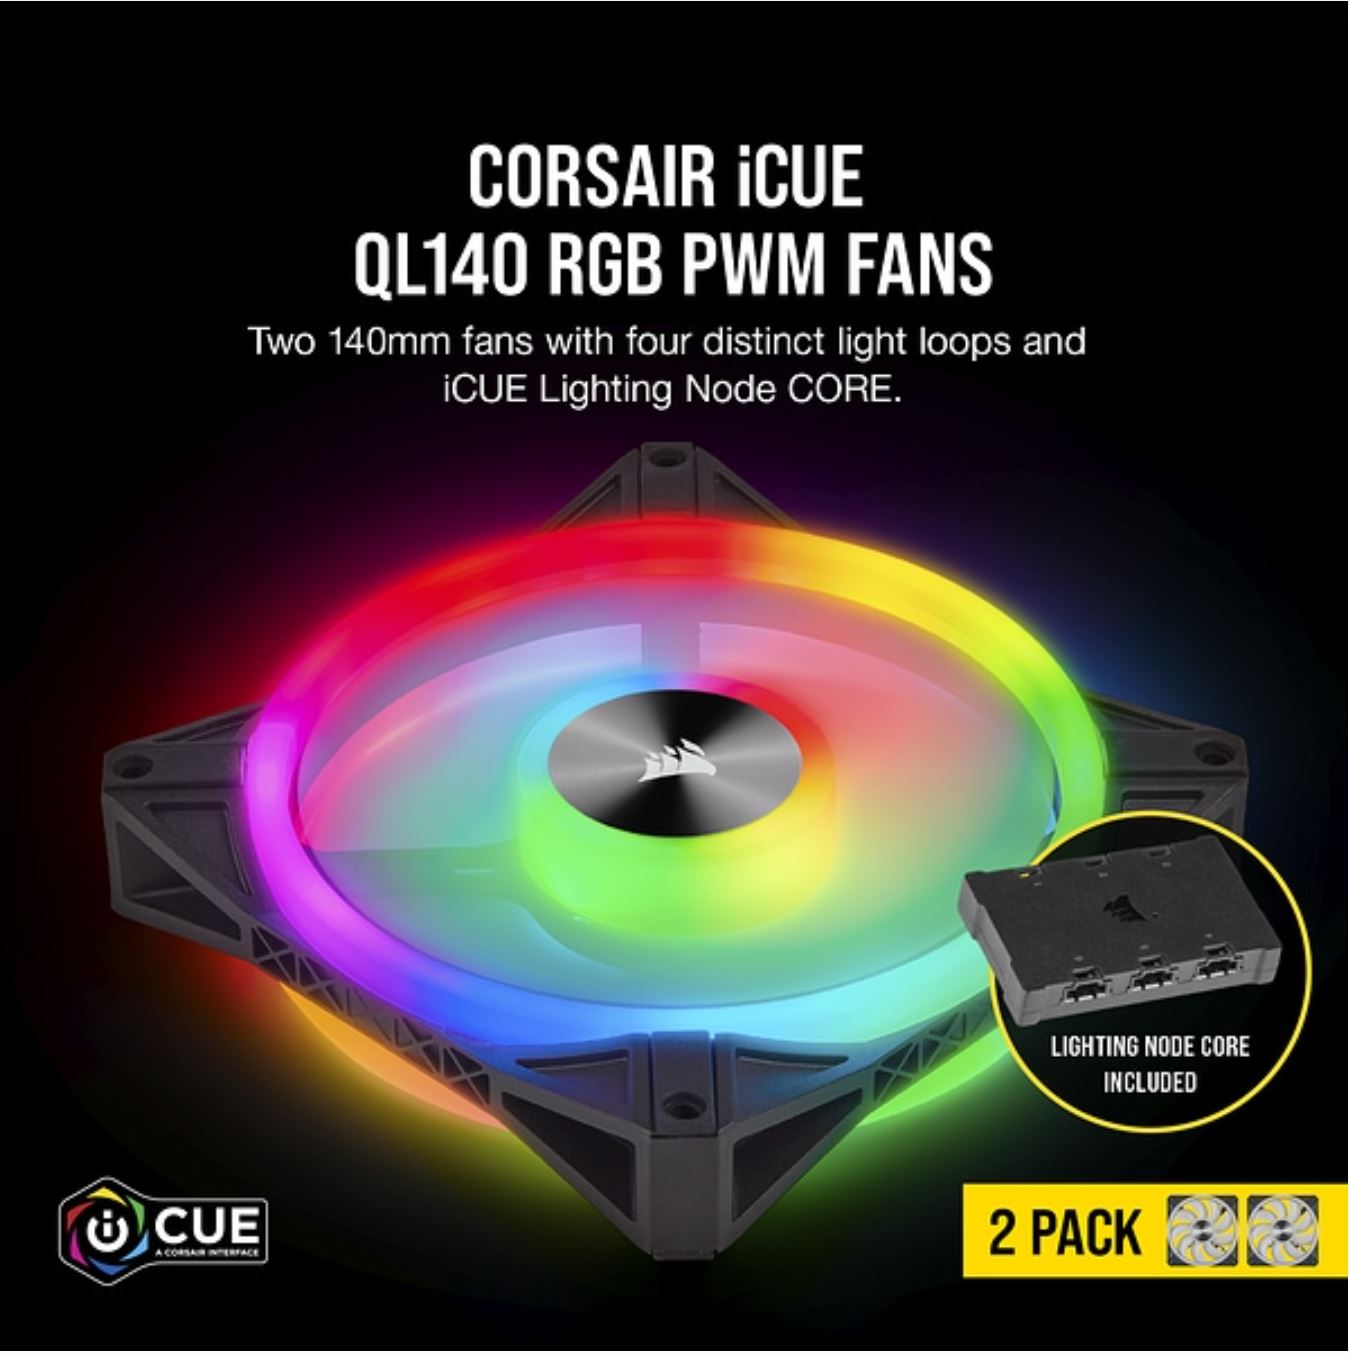 Ql140 Rgb Dual Fan Kit With Lighting Node Core